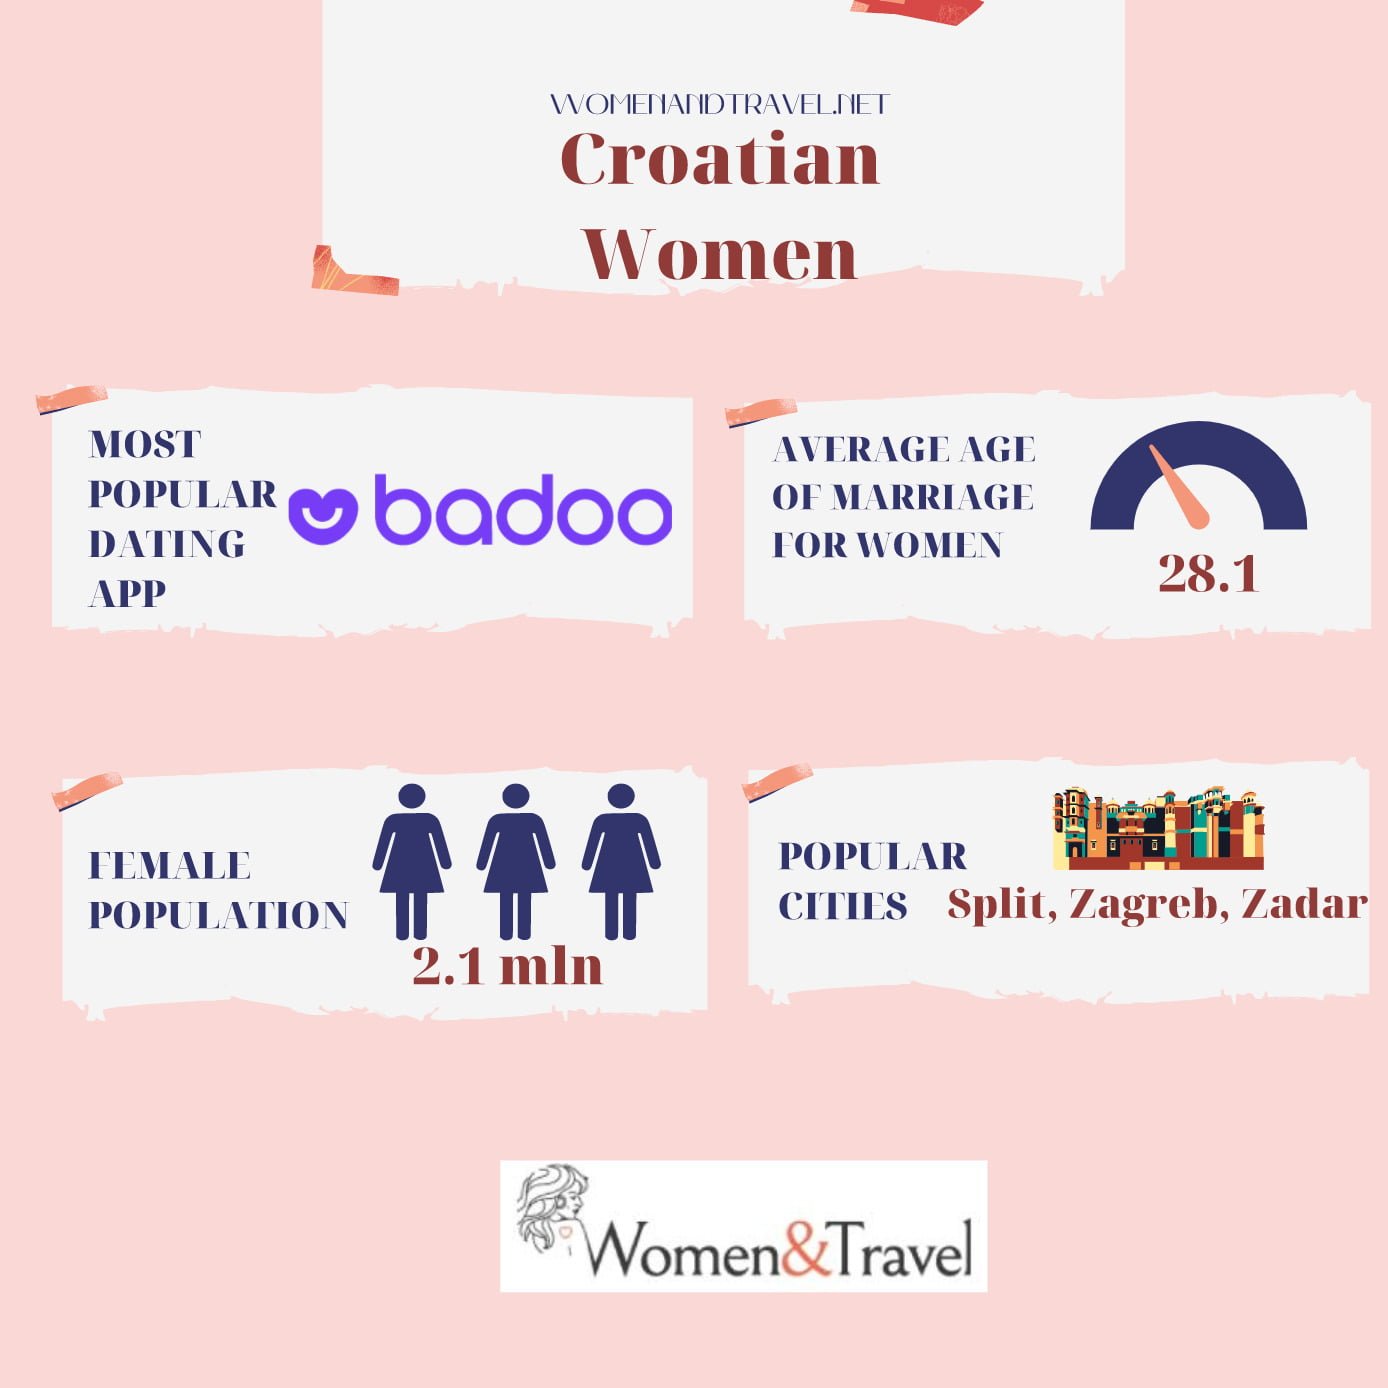 Croatian dating site